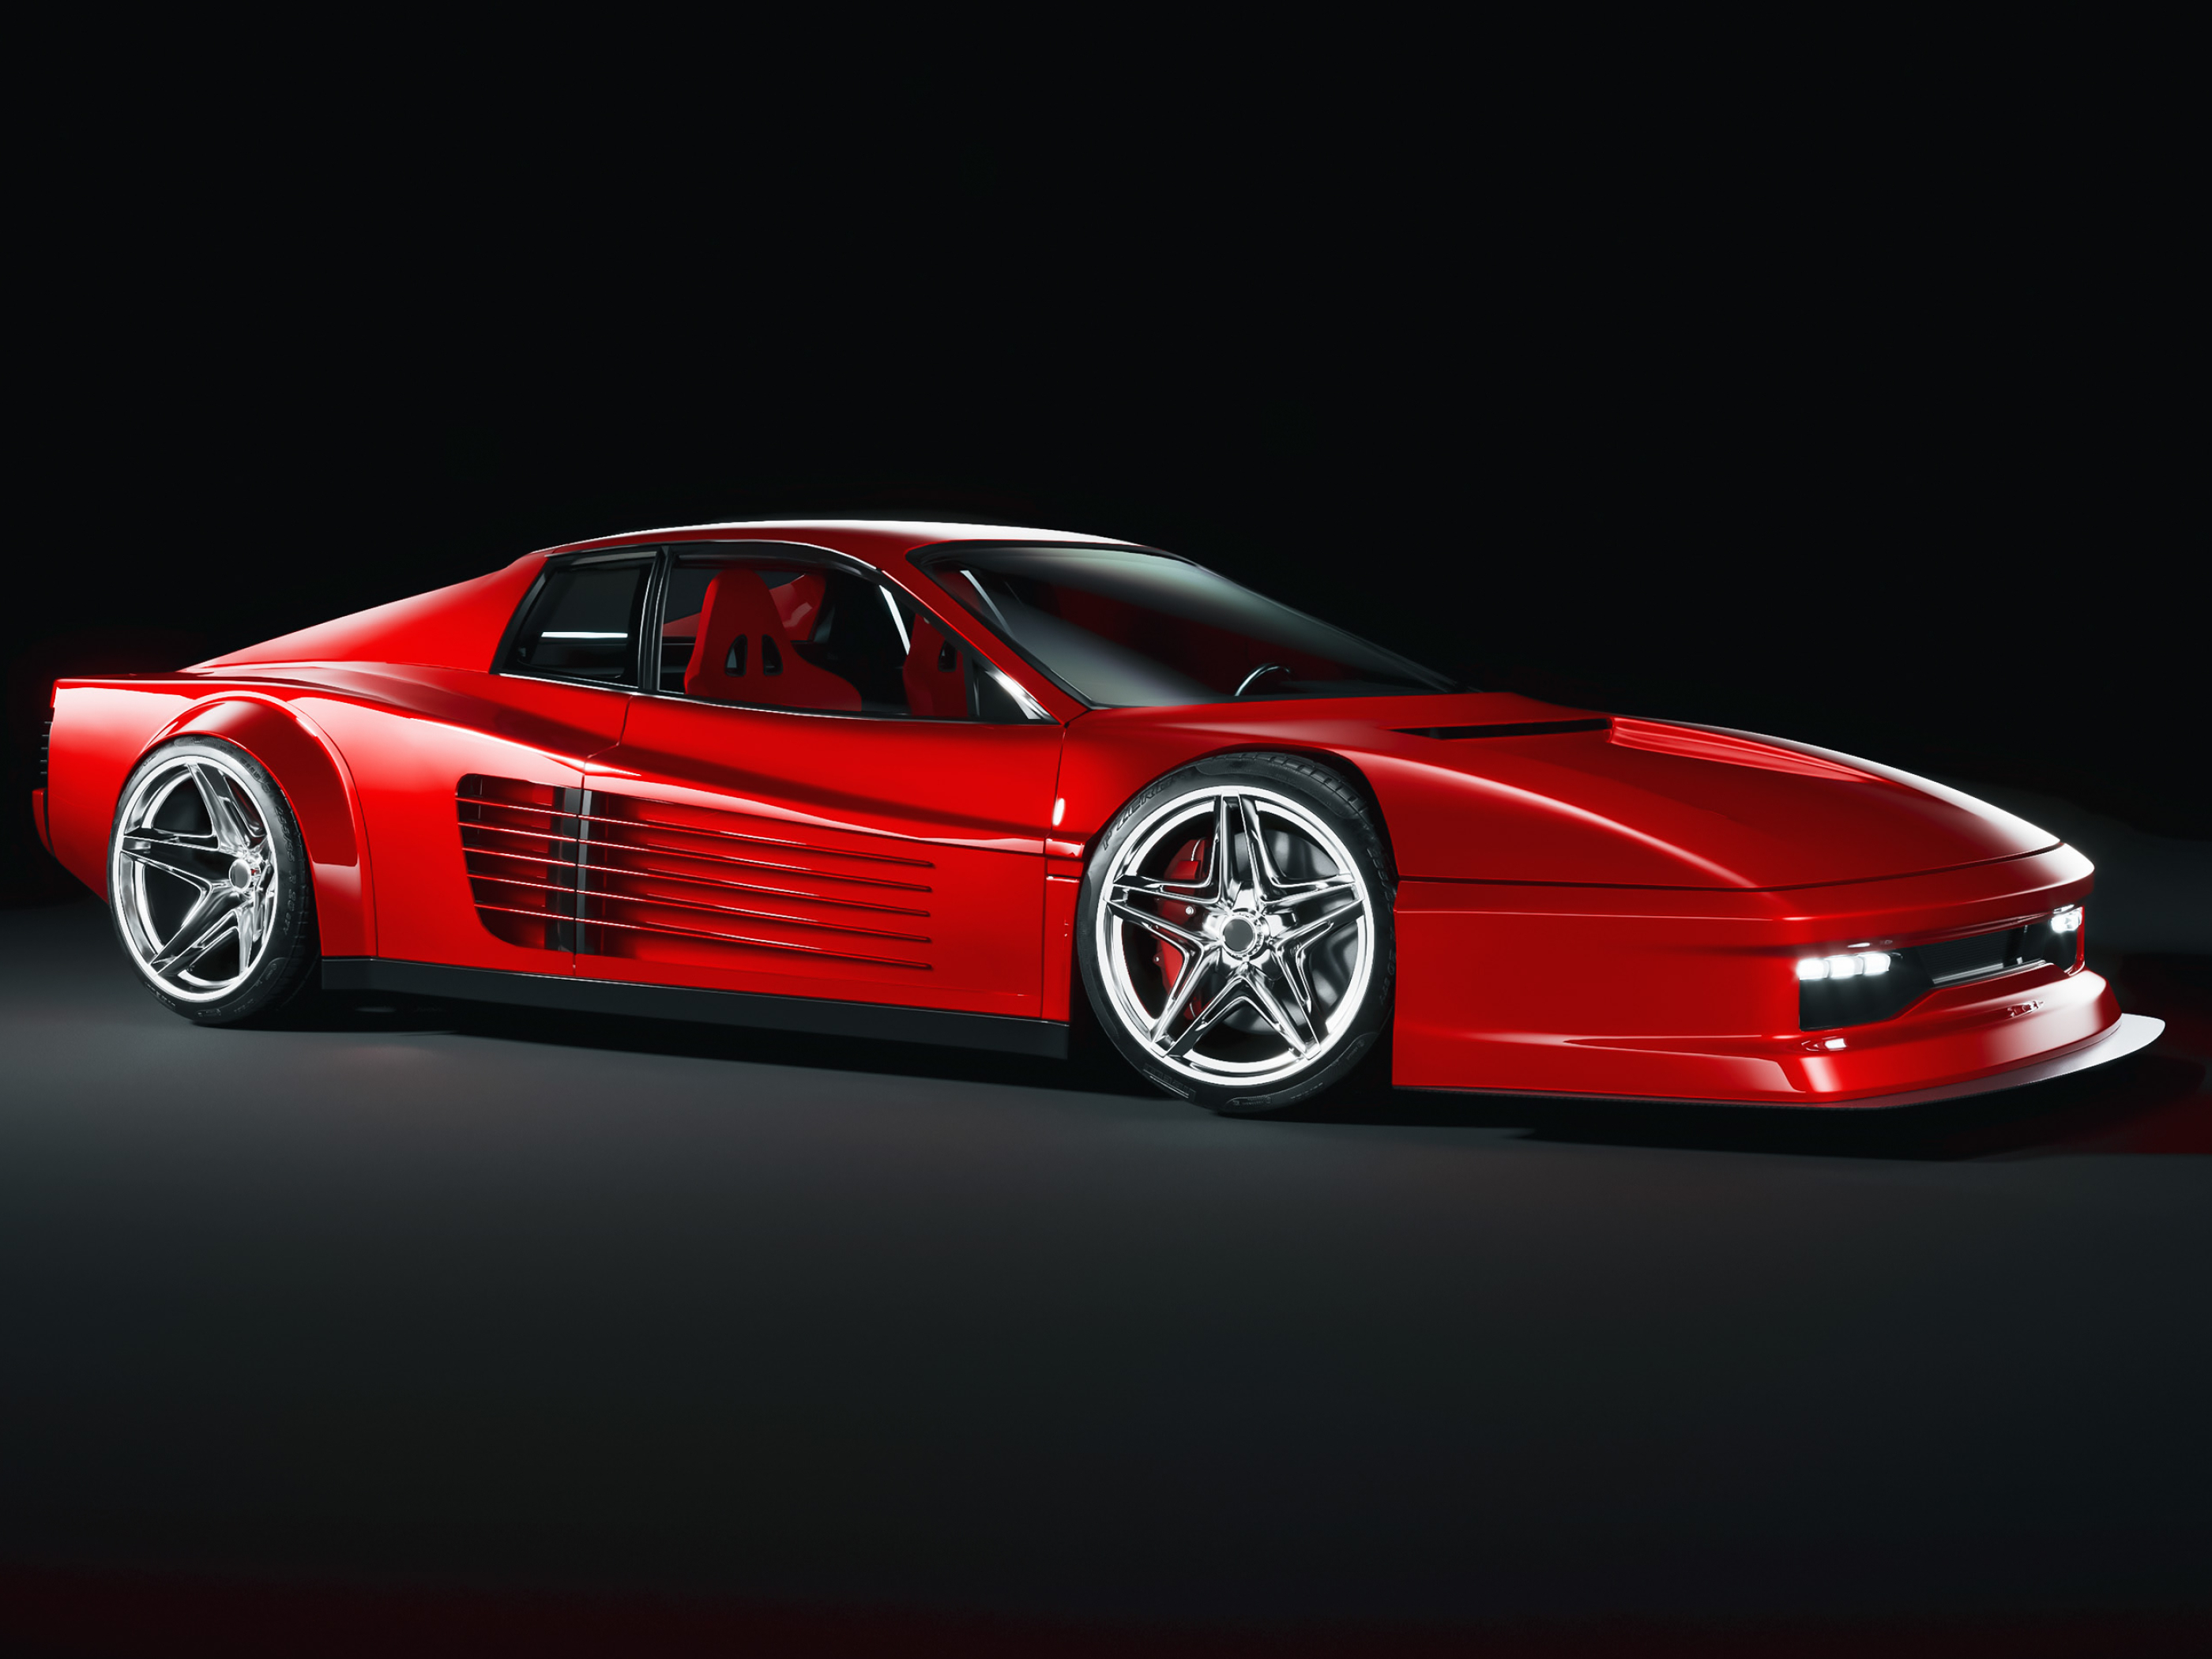 2800x2100 Wallpaper : Ferrari Testarossa, concept art, concept cars, digital art, render, artwork, red cars, car, vehicle, supercars, italian cars FGO2020 2110459 HD Wallpapers